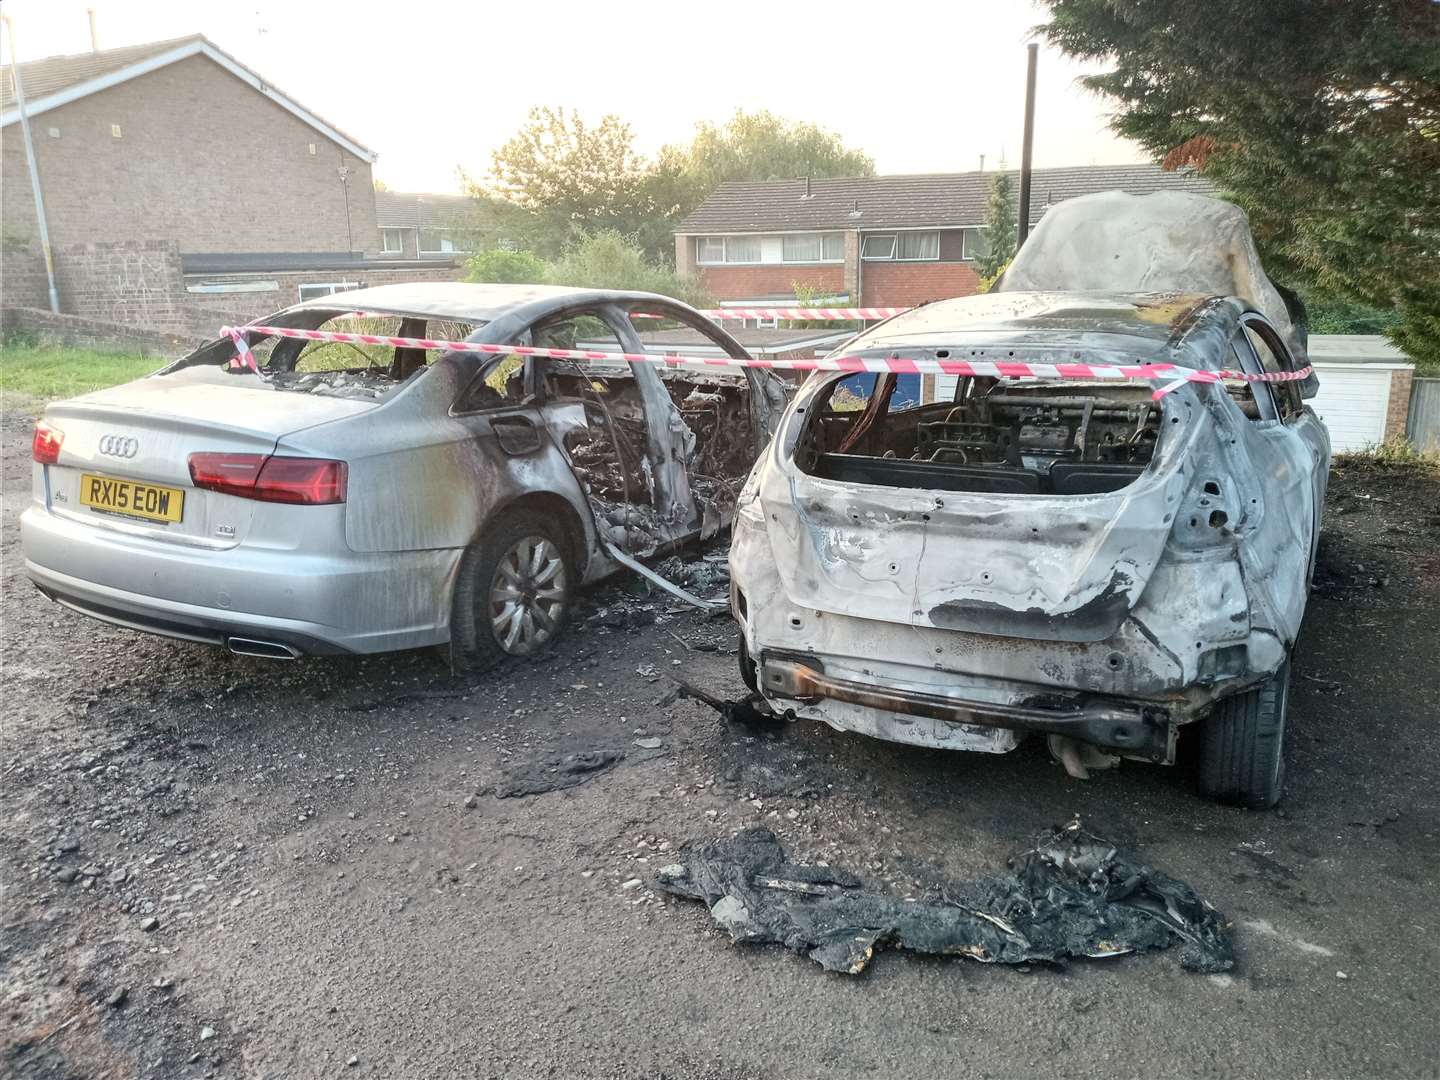 Two more damaged cars in Bishops Way, Canterbury, this morning